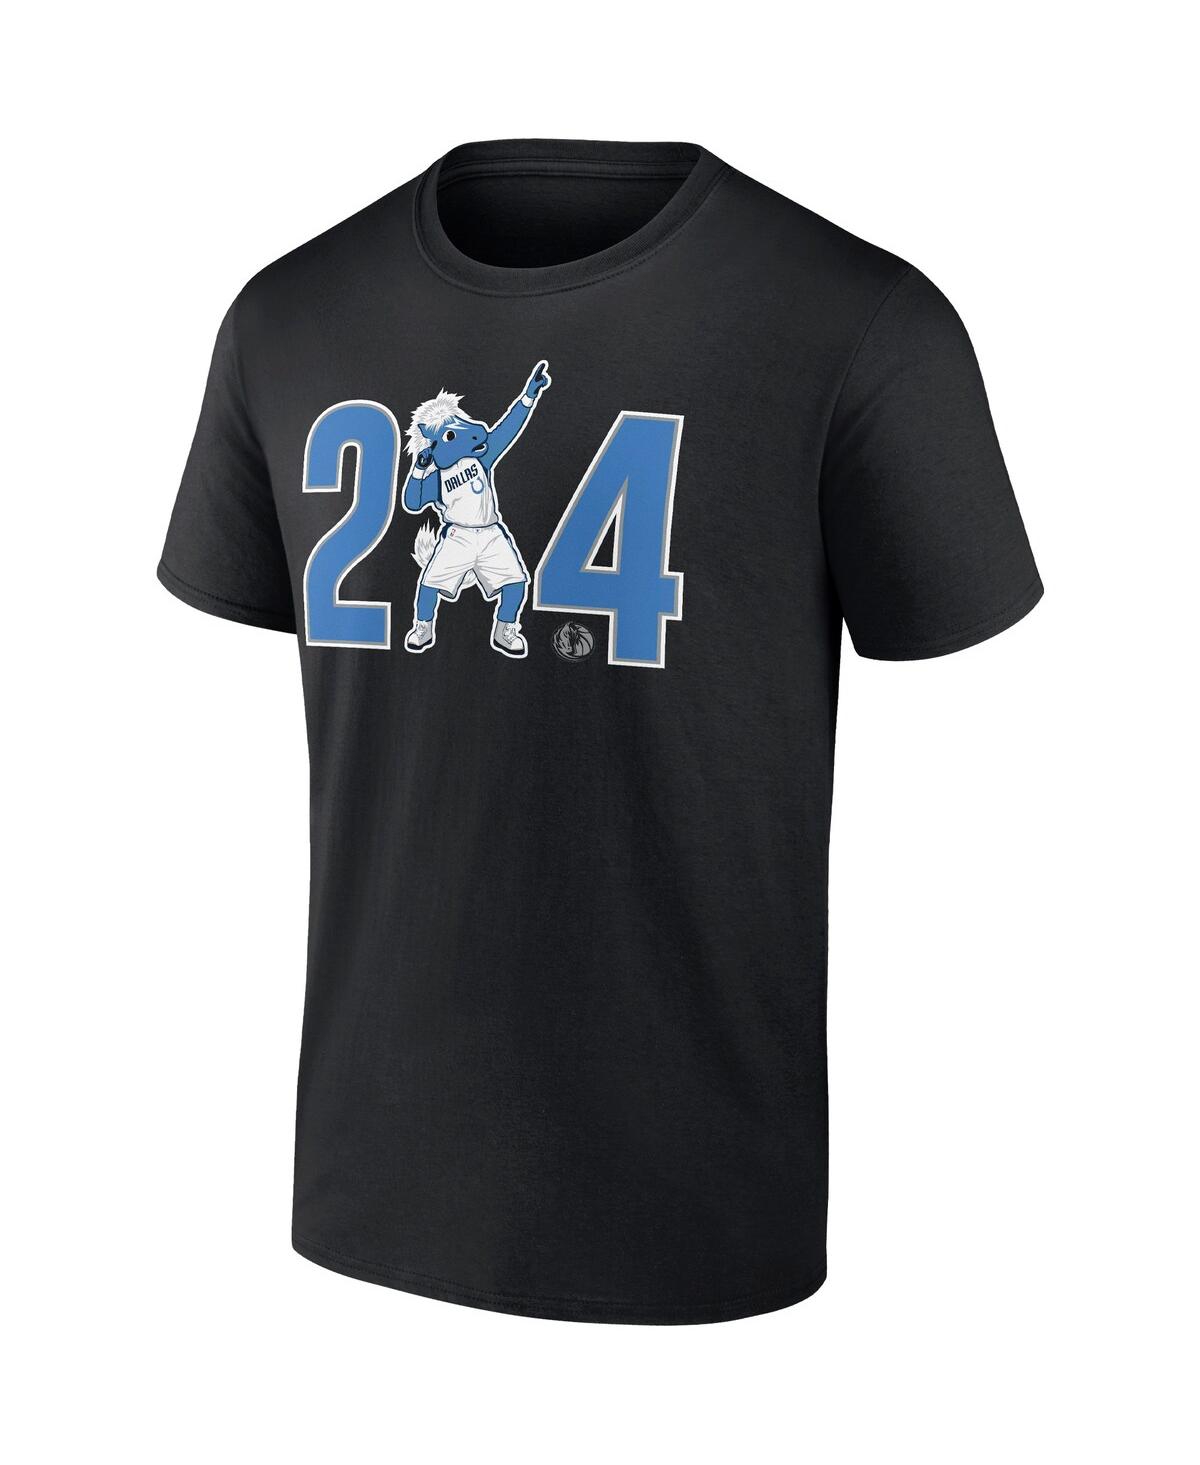 Shop Fanatics Men's  Black Dallas Mavericks Champ 214 Hometown Collection T-shirt